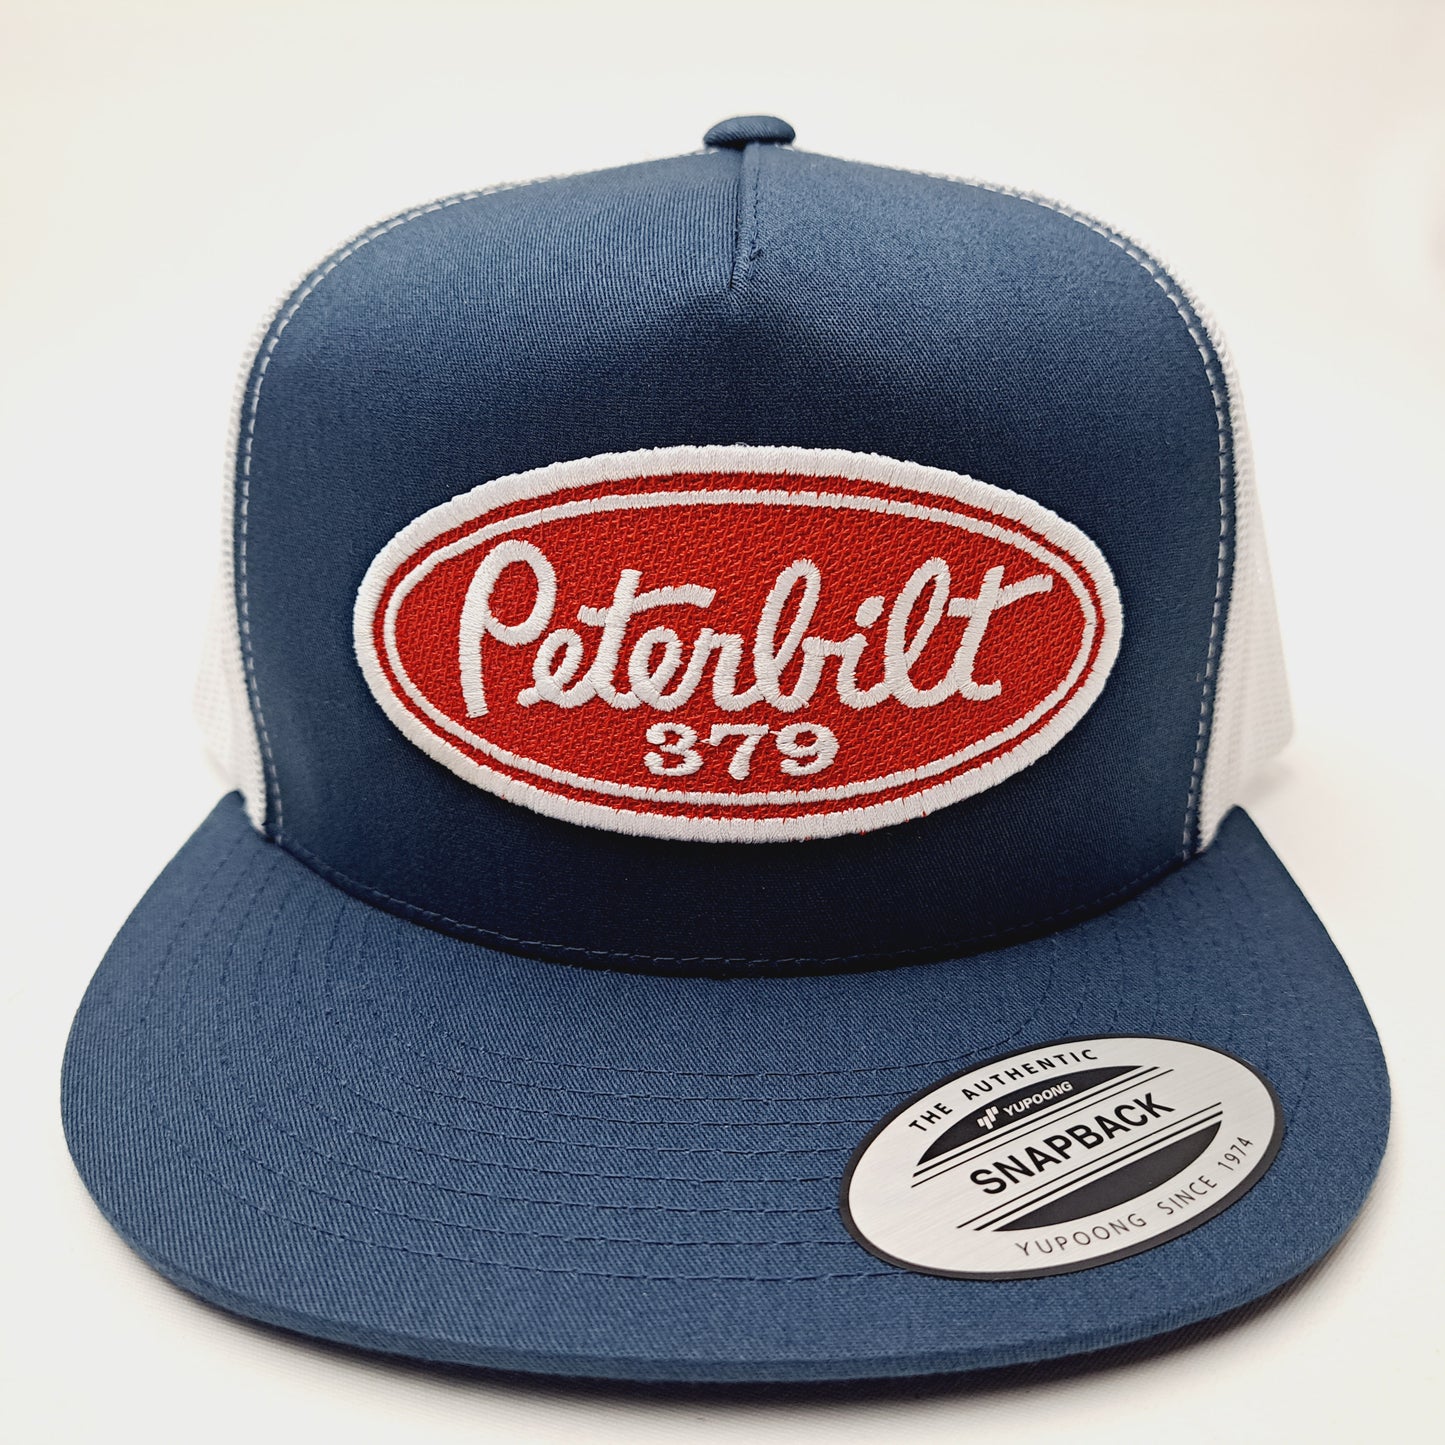 Peterbilt 379 Vintage Patch Flat Bill Trucker Mesh Snapback Hat Cap Blue & White